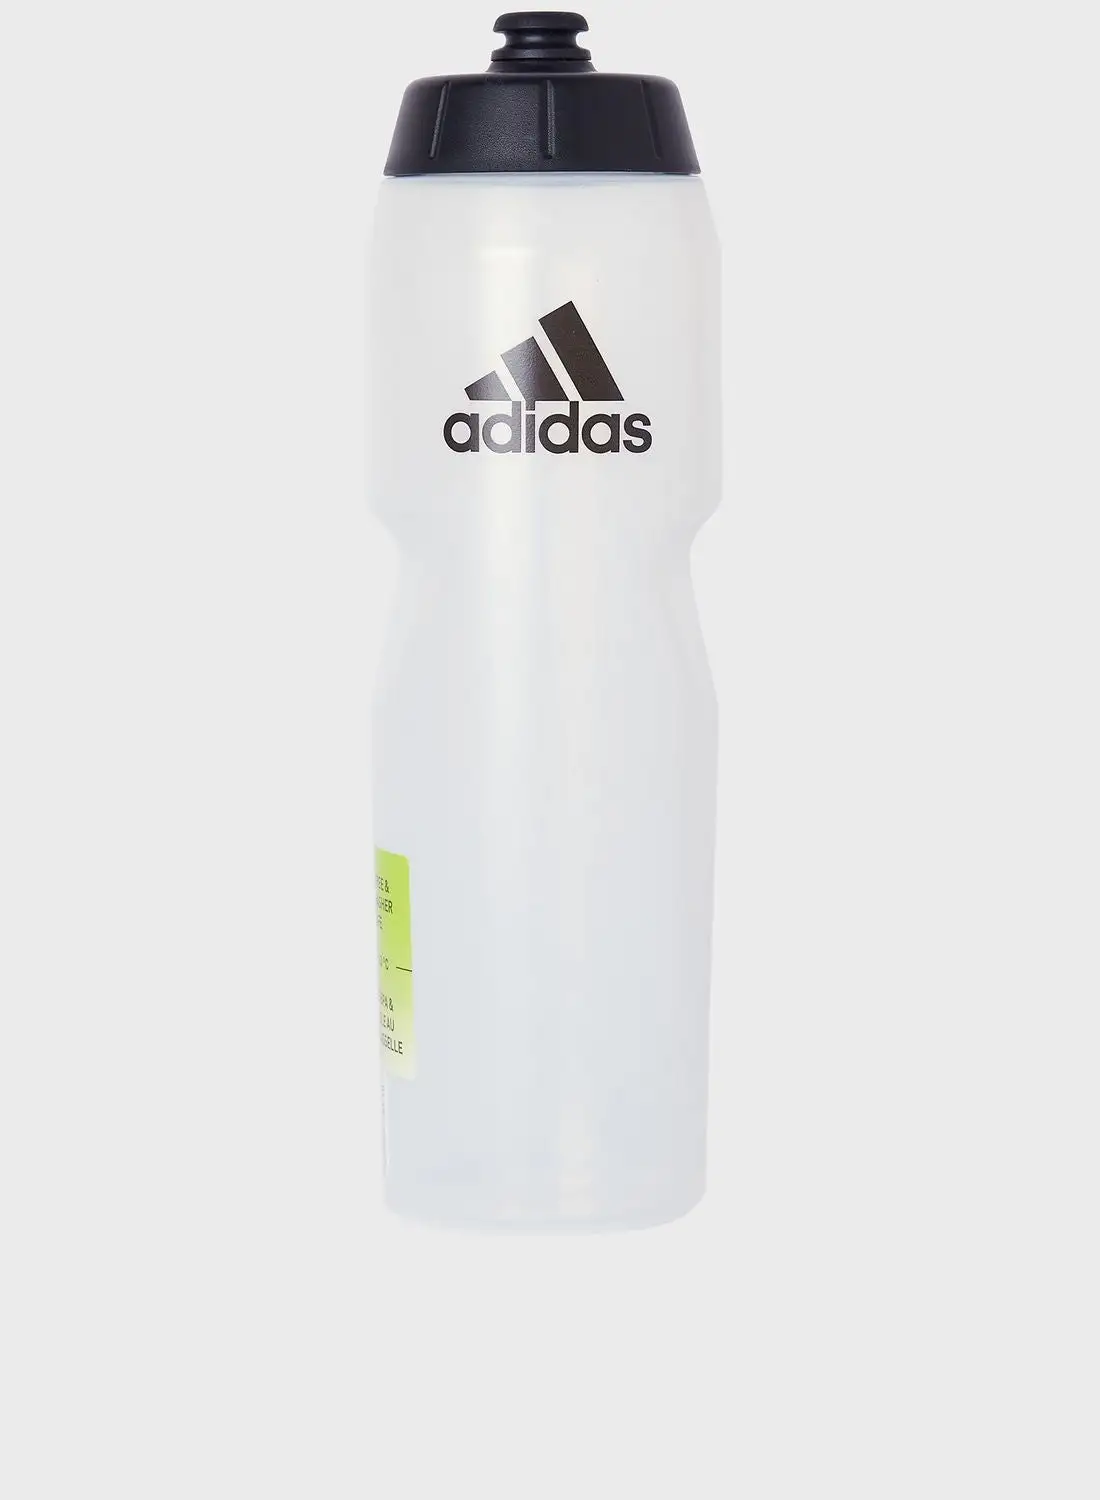 Adidas Performance Bottle 75oml